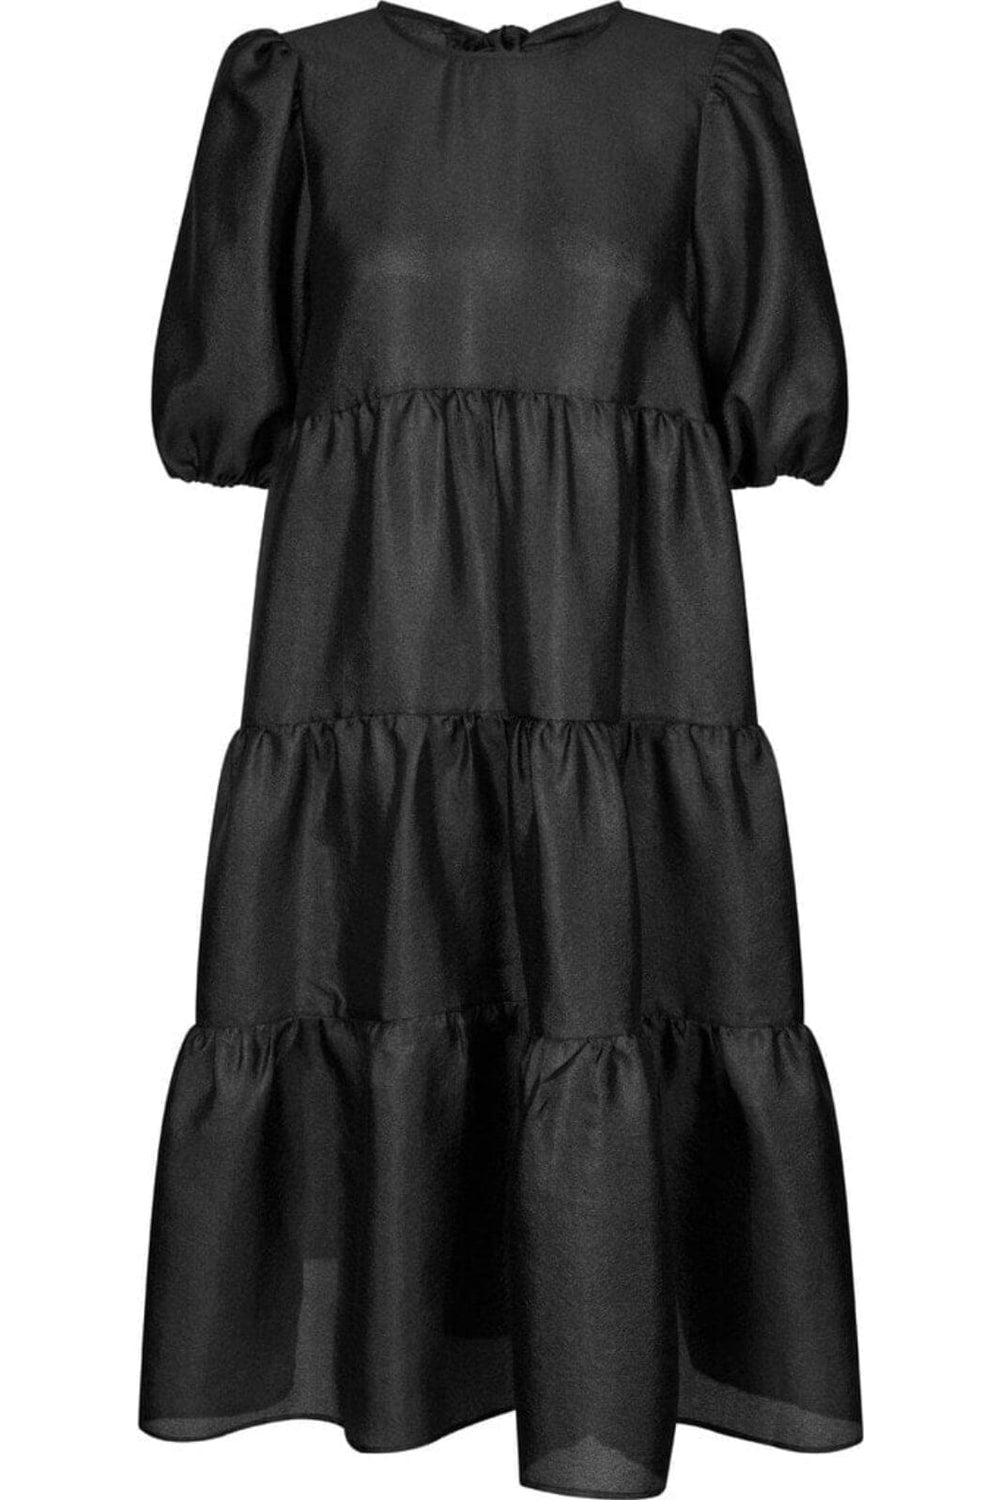 Cras - Lilicras Dress Black Kjoler 